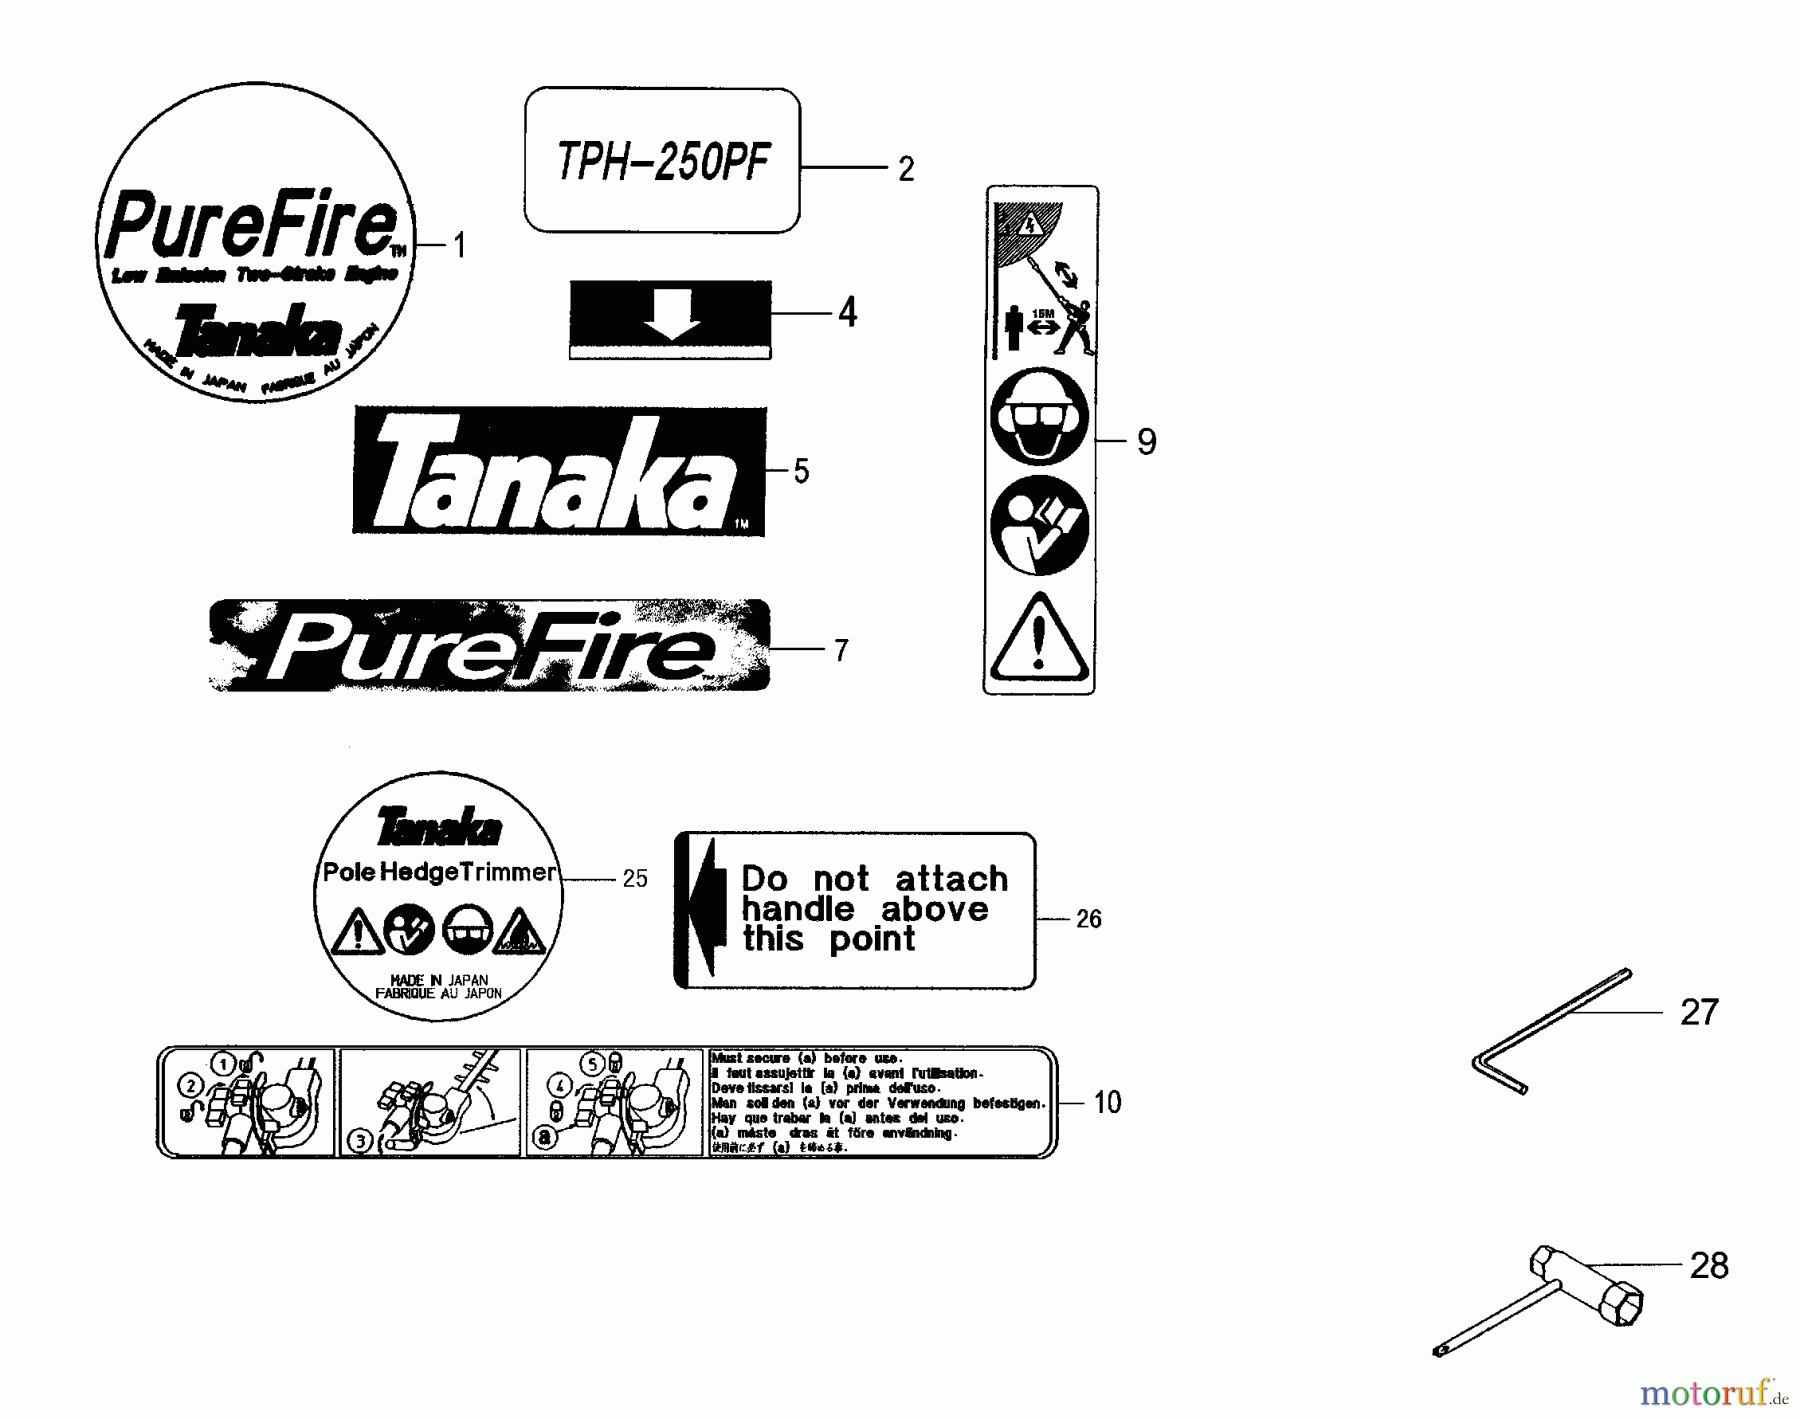  Tanaka Heckenscheeren TPH-250PF - Tanaka Articulating Pole Hedge Trimmer Decals & Tools